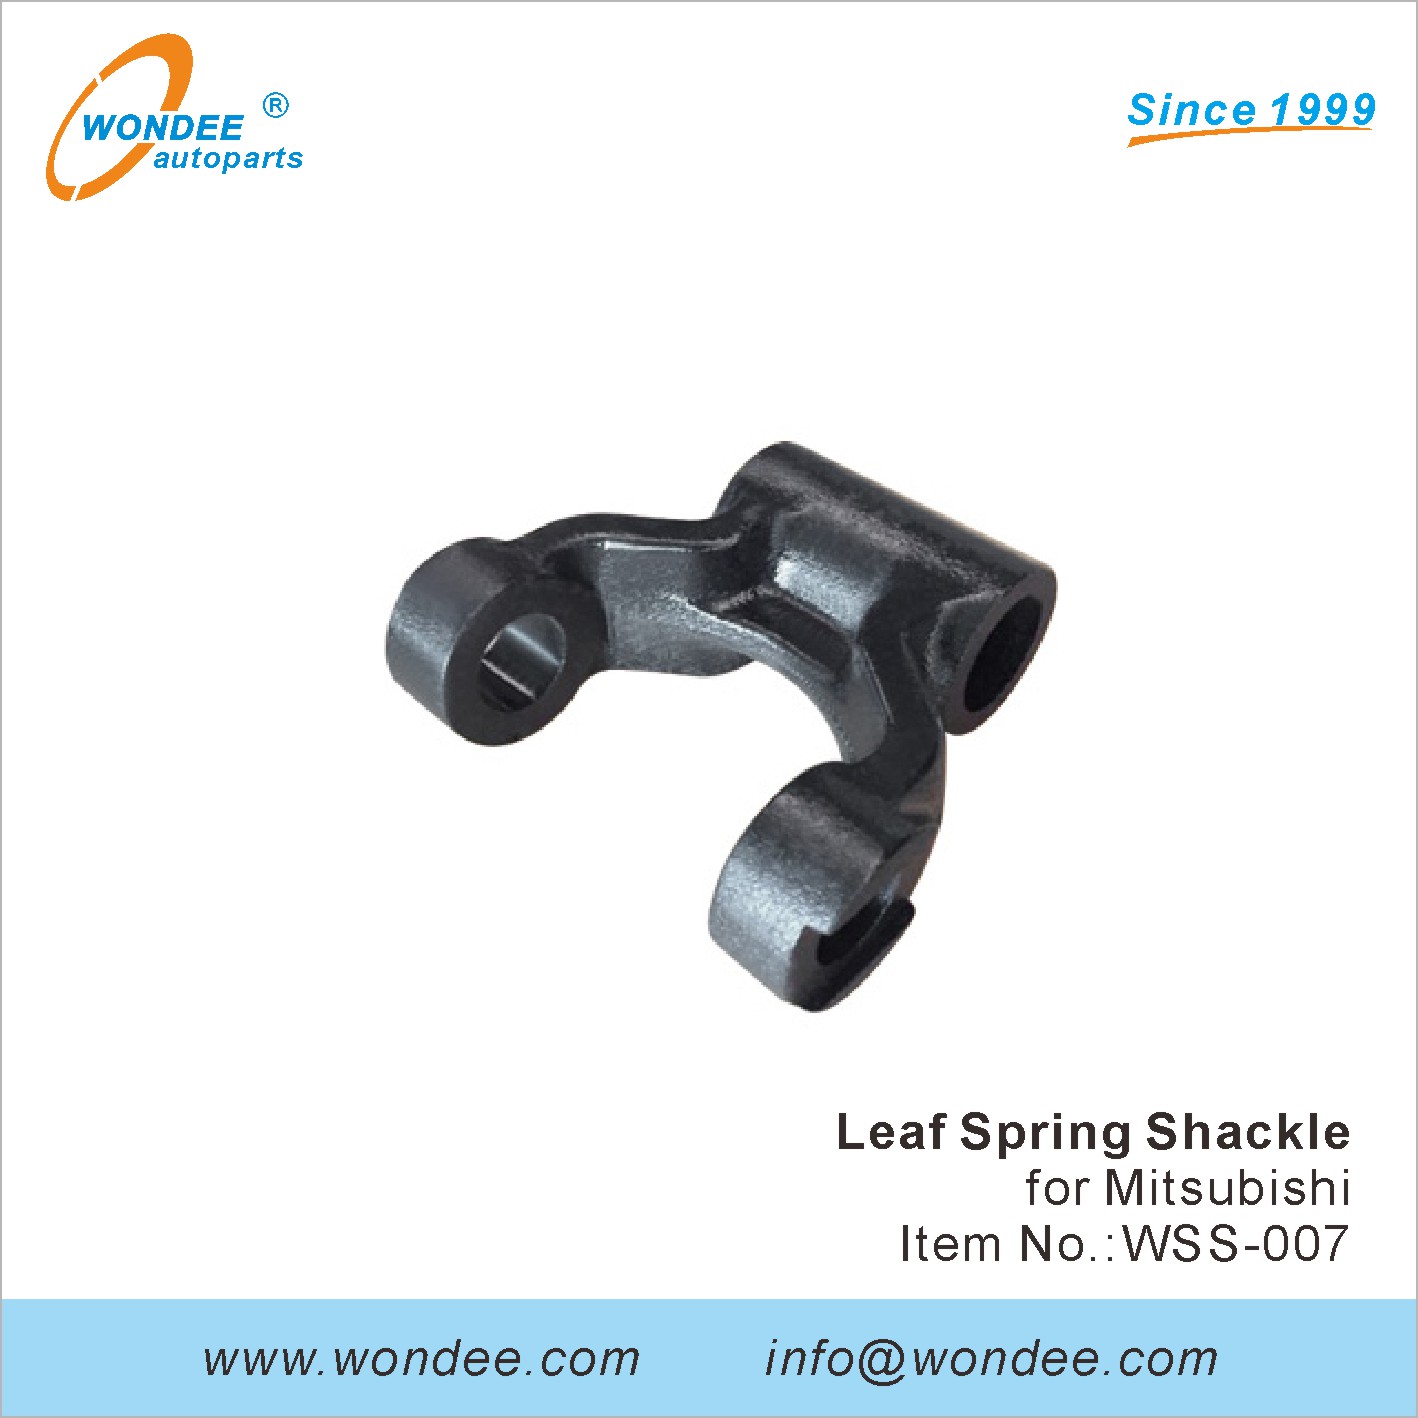 WONDEE leaf spring shackle (7)